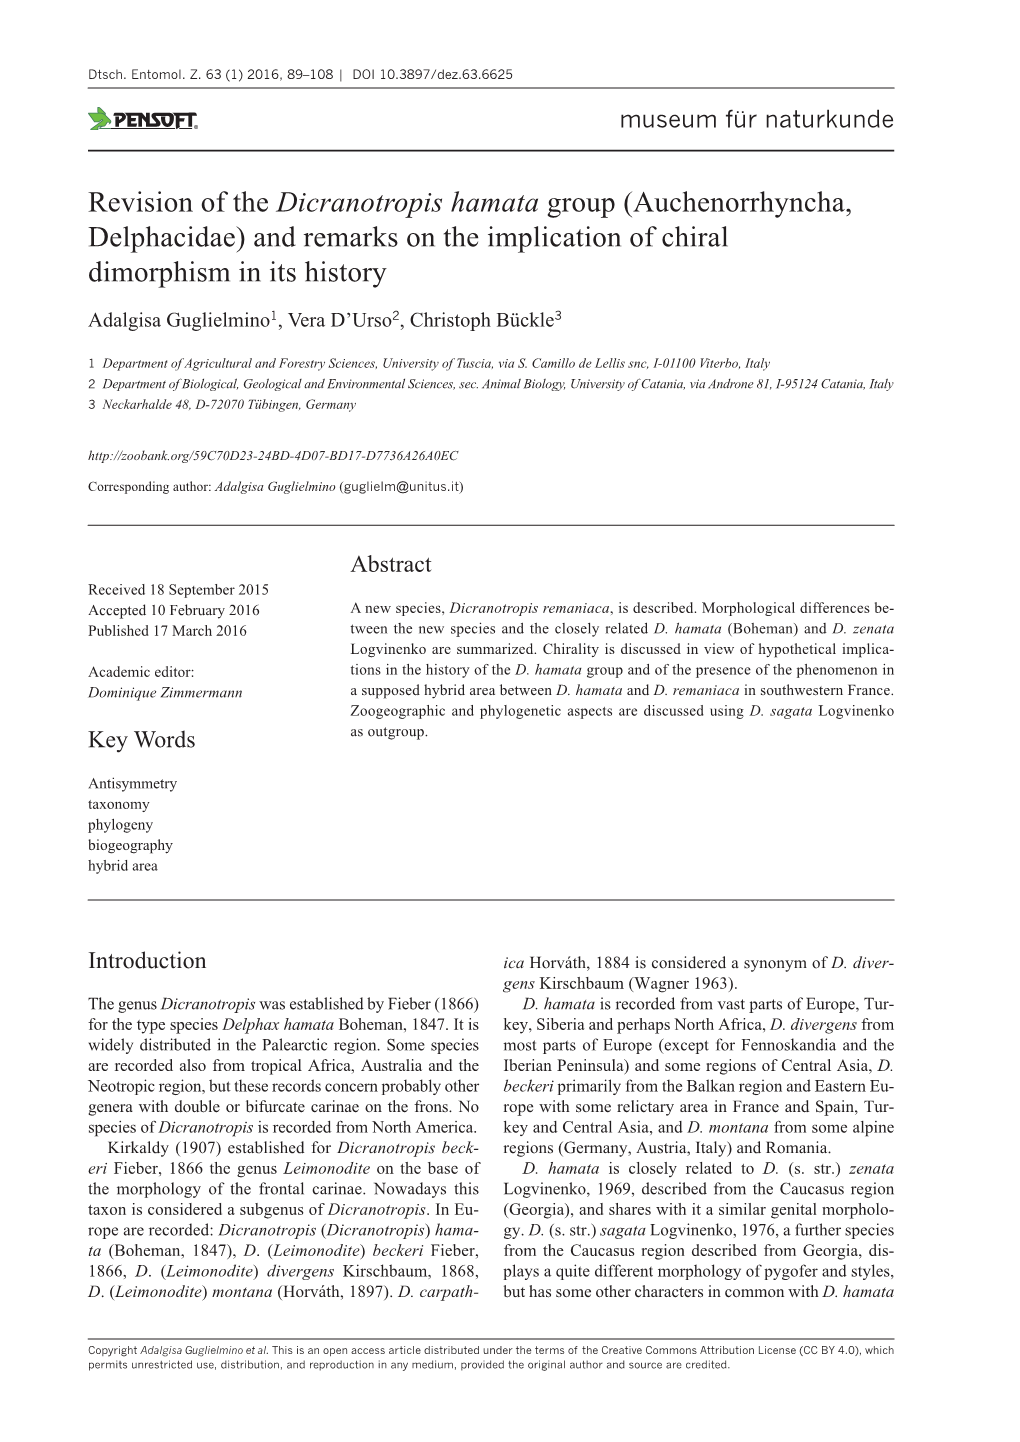 ﻿Revision of the Dicranotropis Hamata Group (Auchenorrhyncha